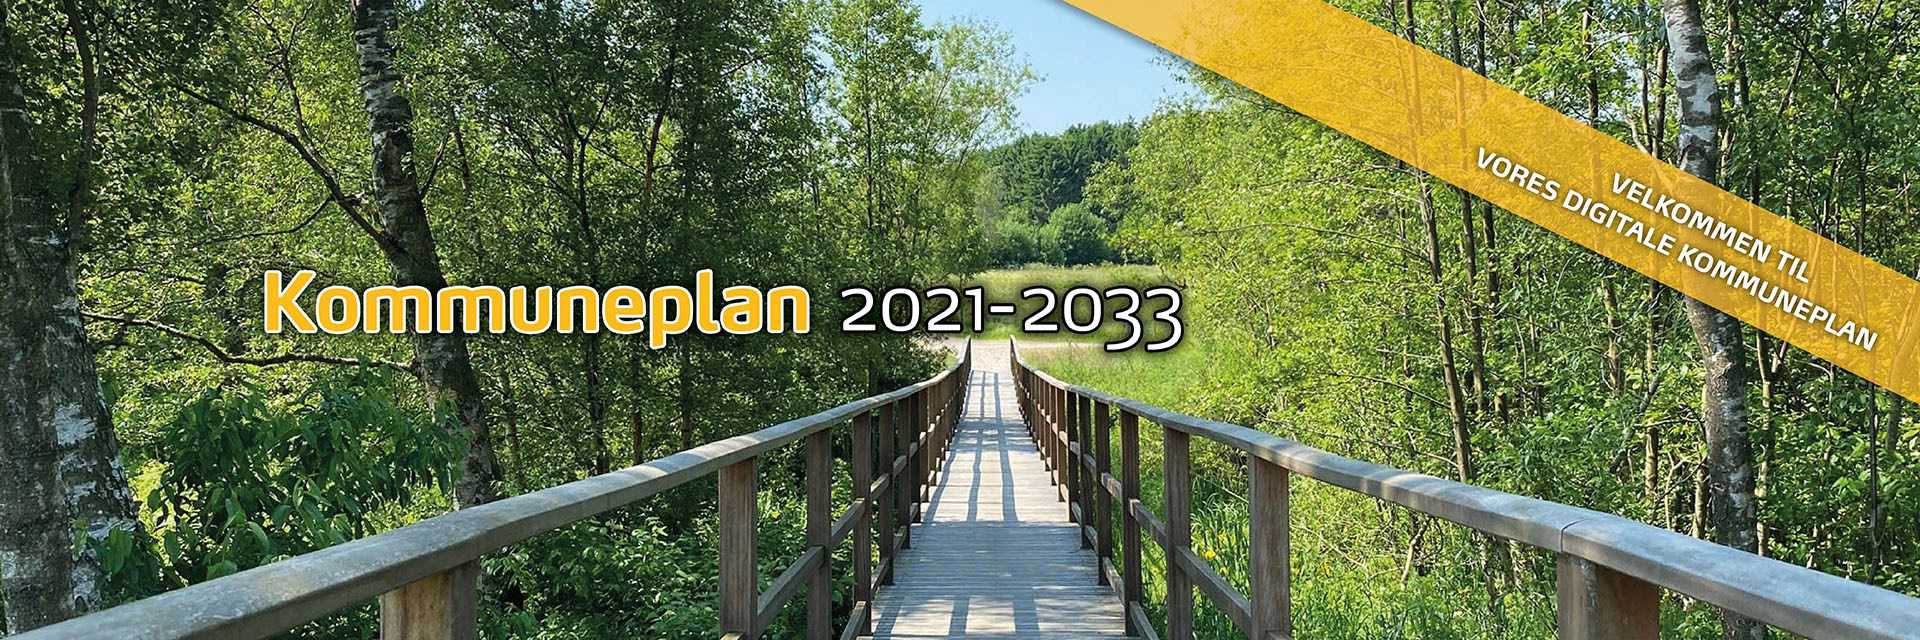 Kommuneplan 2021-2033 forsidebanner